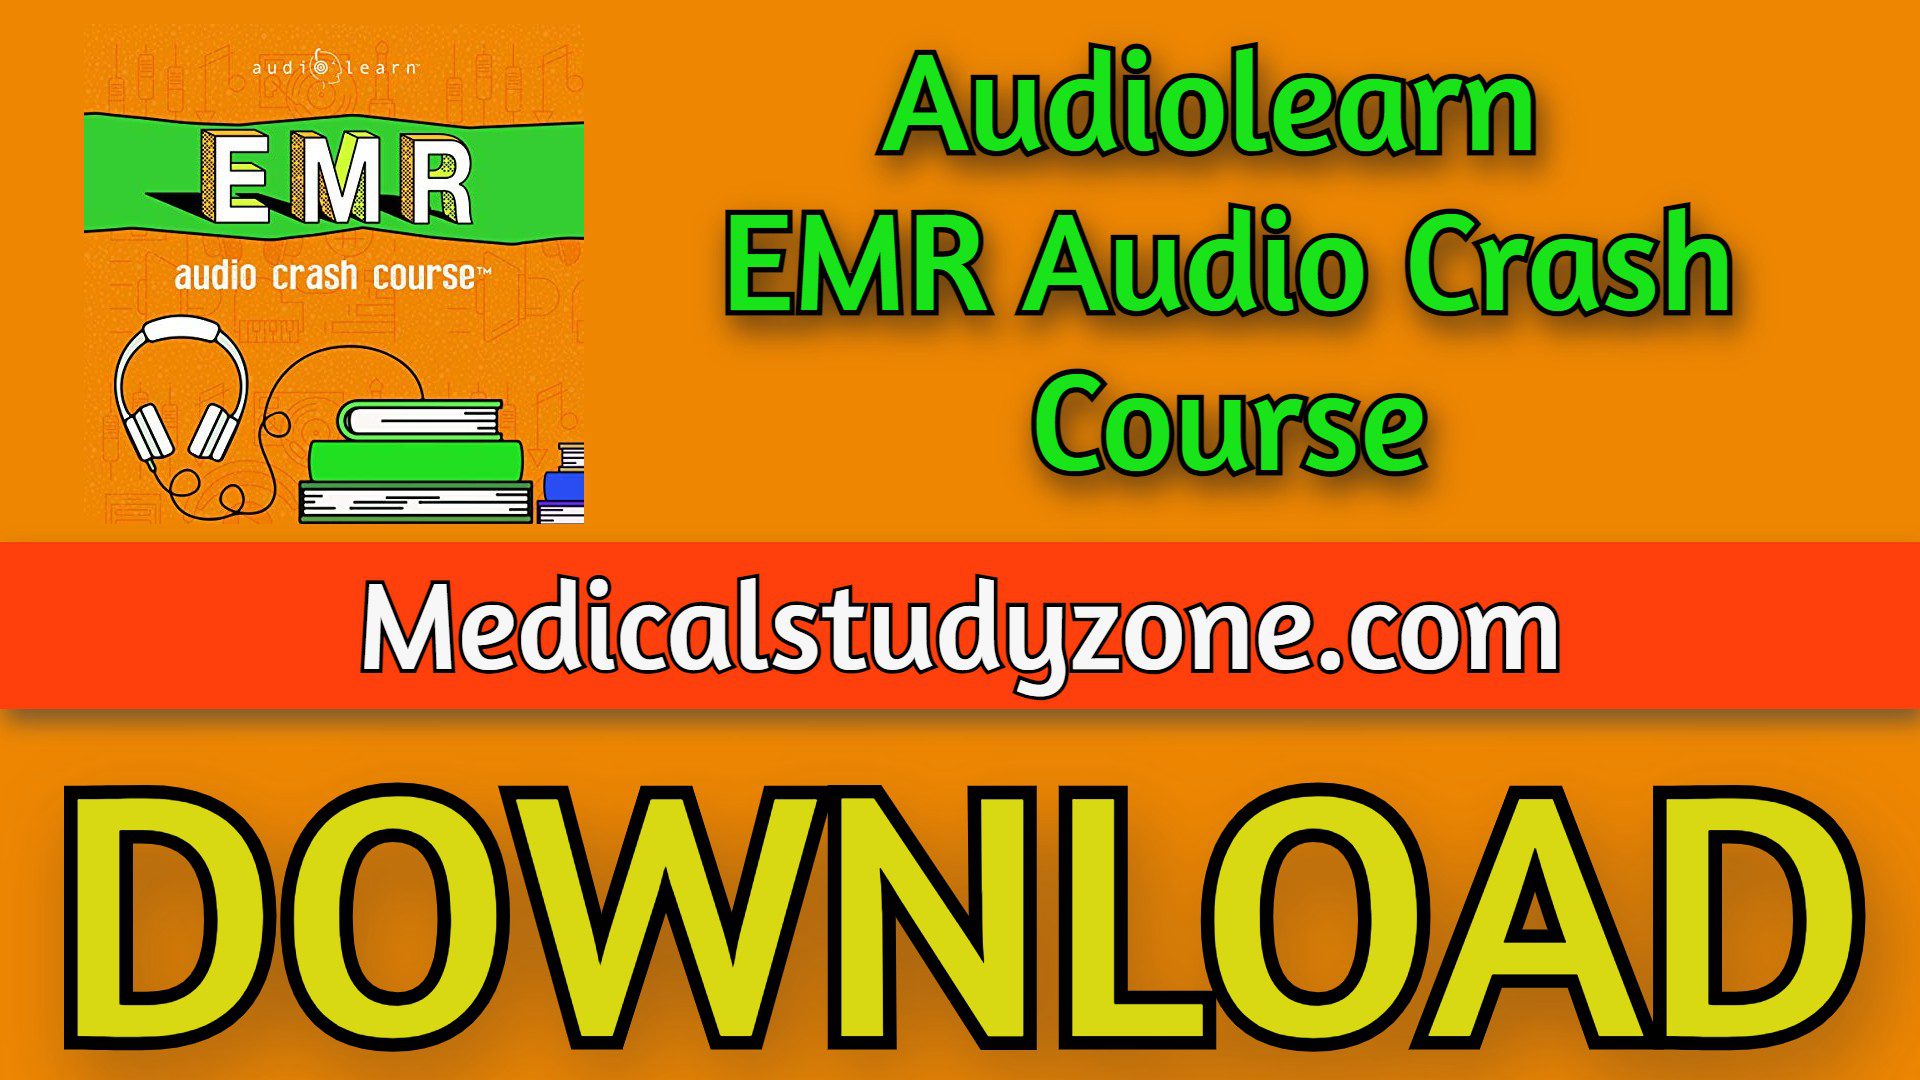 Audiolearn EMR Audio Crash Course 2021 Free Download